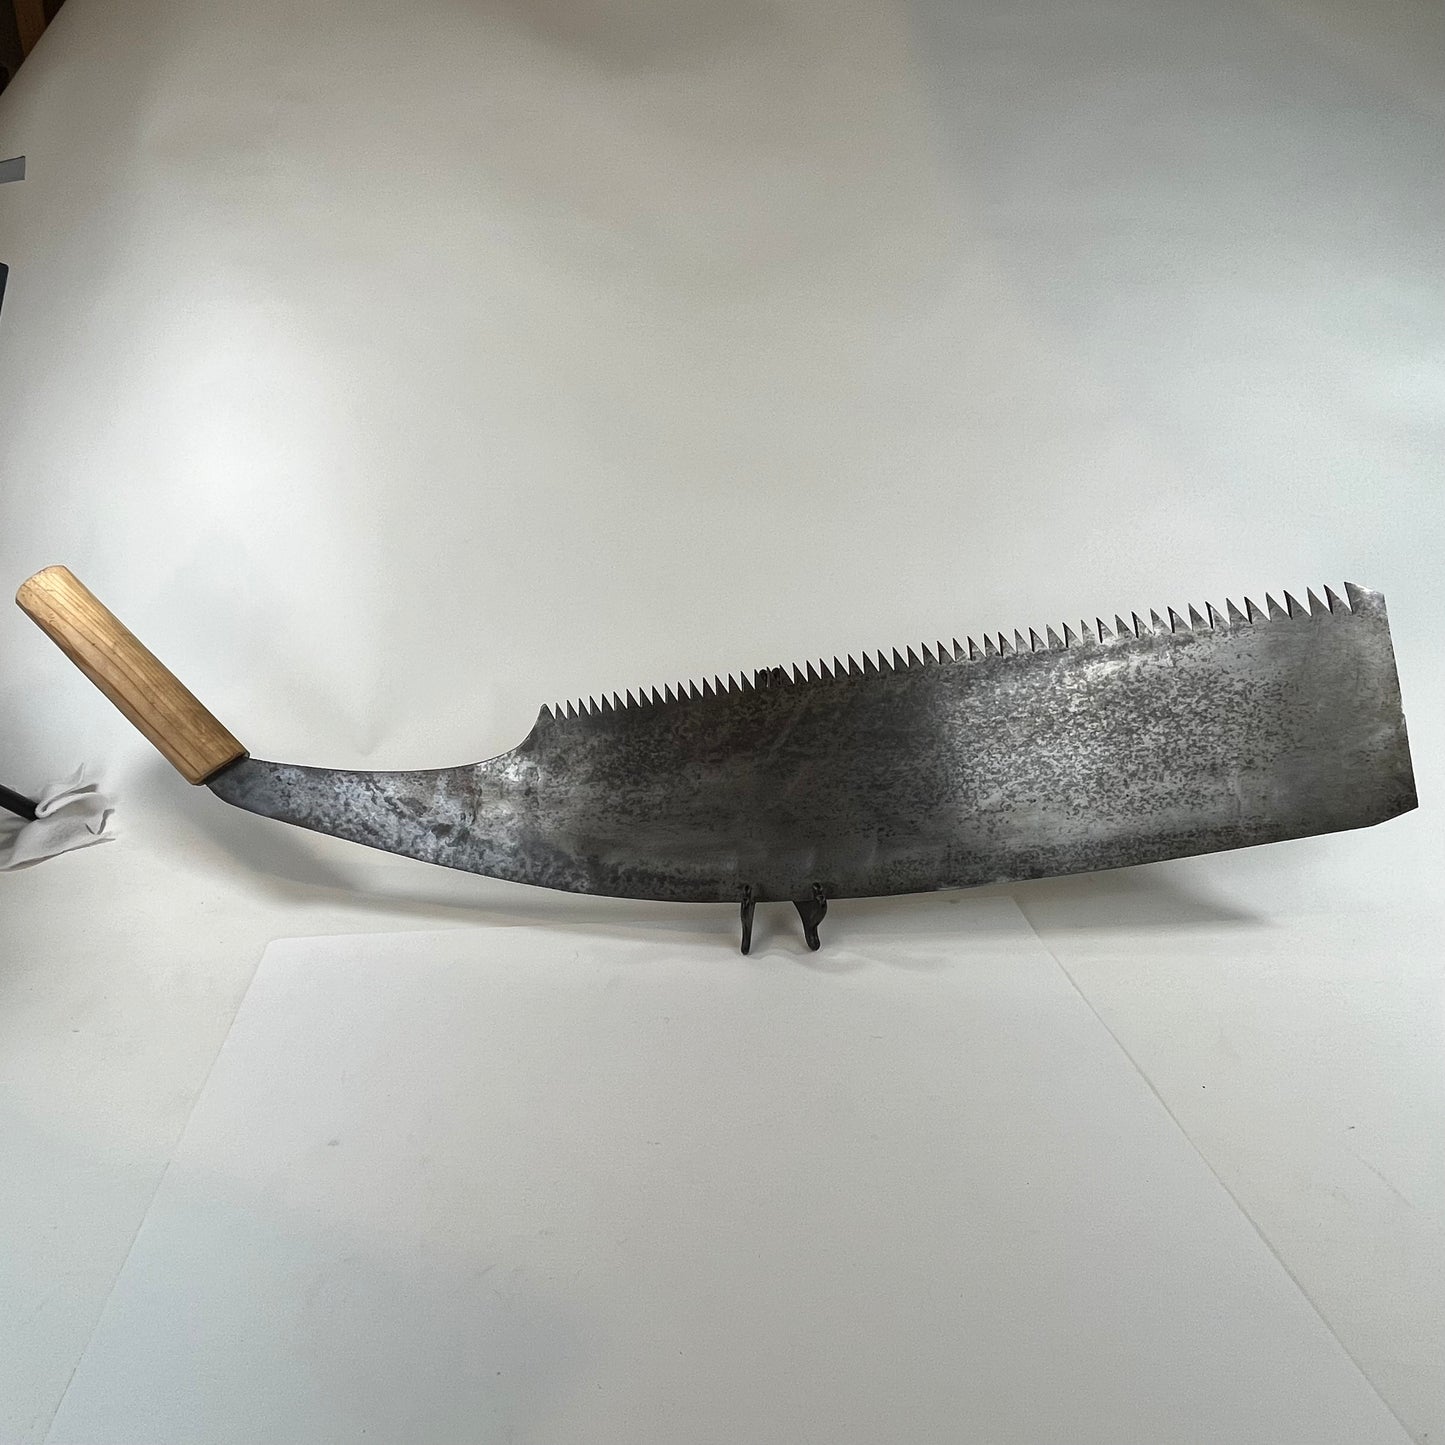 Antique Japanese Saw c1800’s Nokogiri Forged Iron Tool 44”